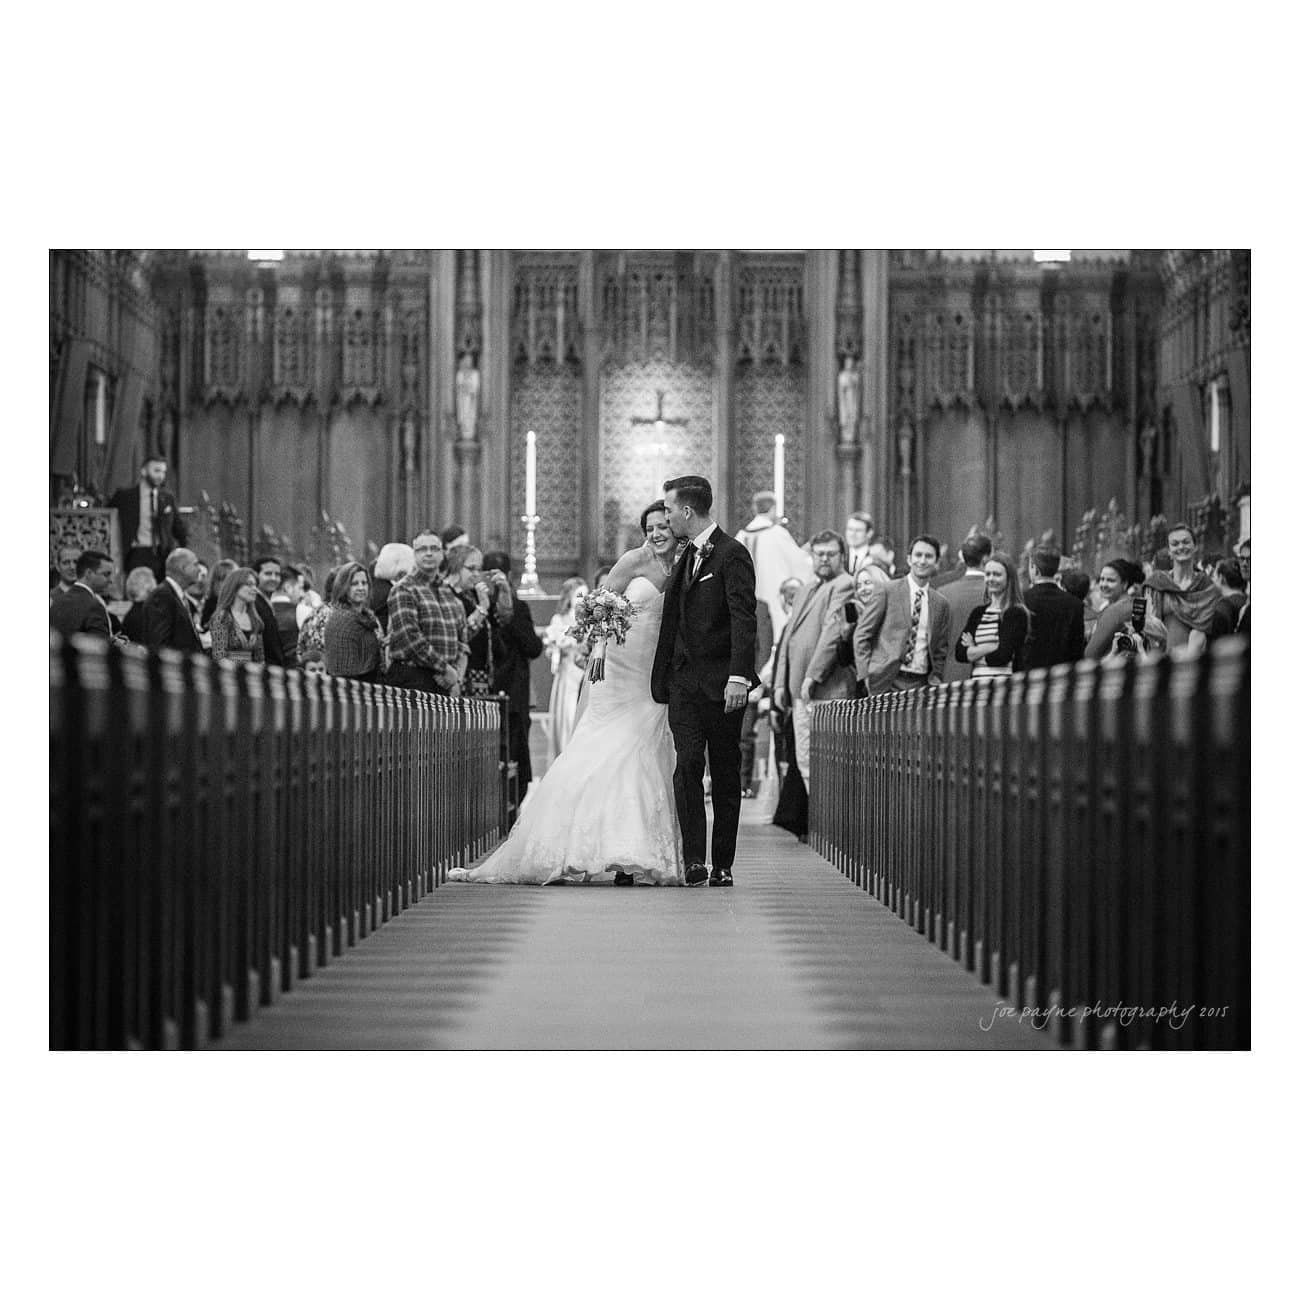 duke chapel wedding photographer - michelle & jonathan